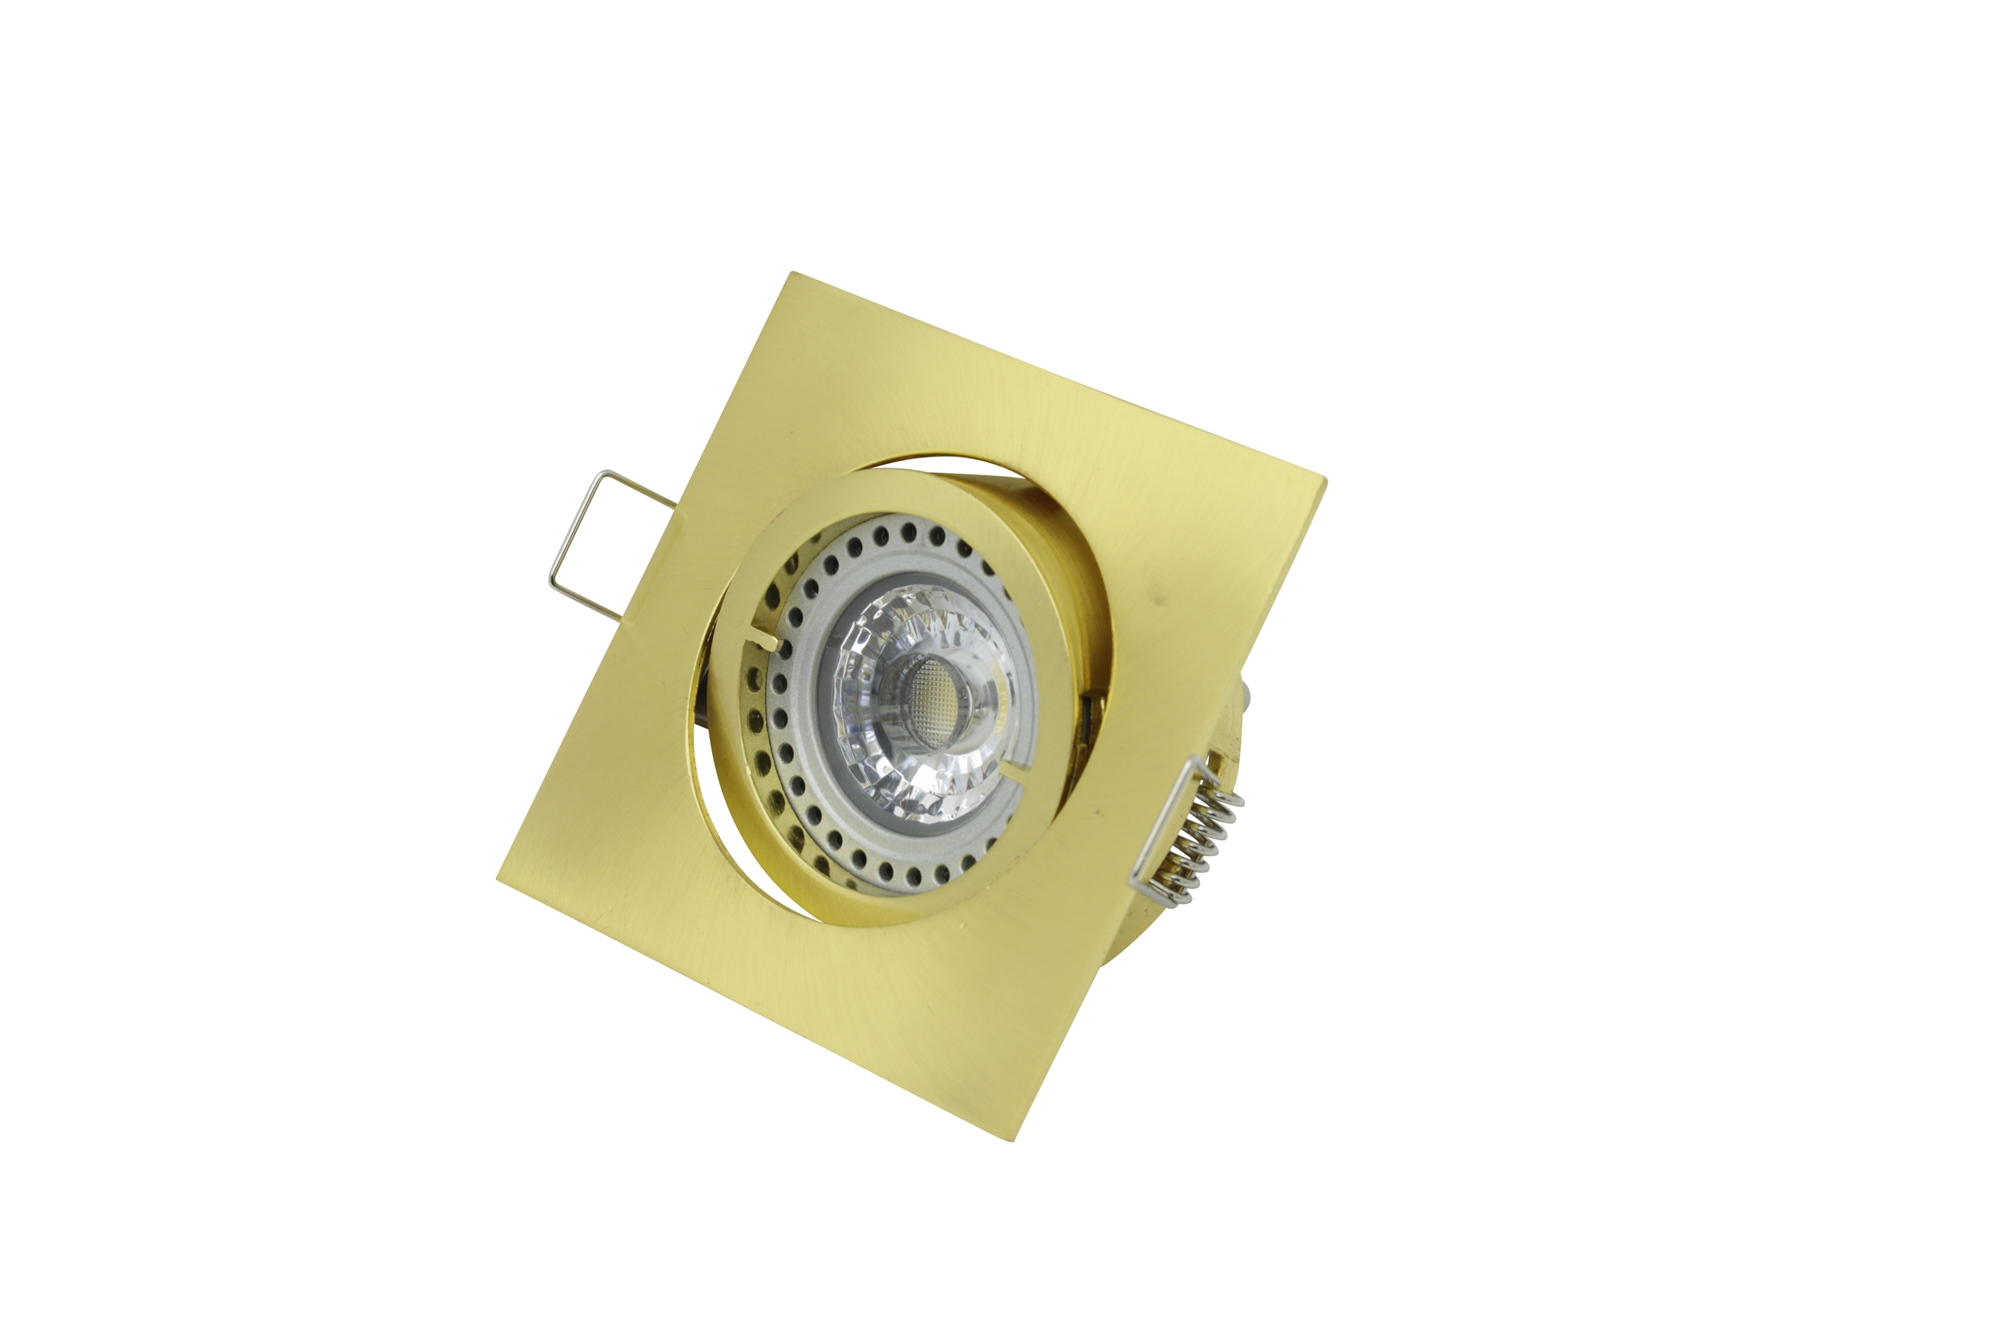 Lampenlux LED-Einbaustrahler Spot Snap eckig gold schwenkbar 8.2x8.2cm 230V GU10 rostfrei Aluminium